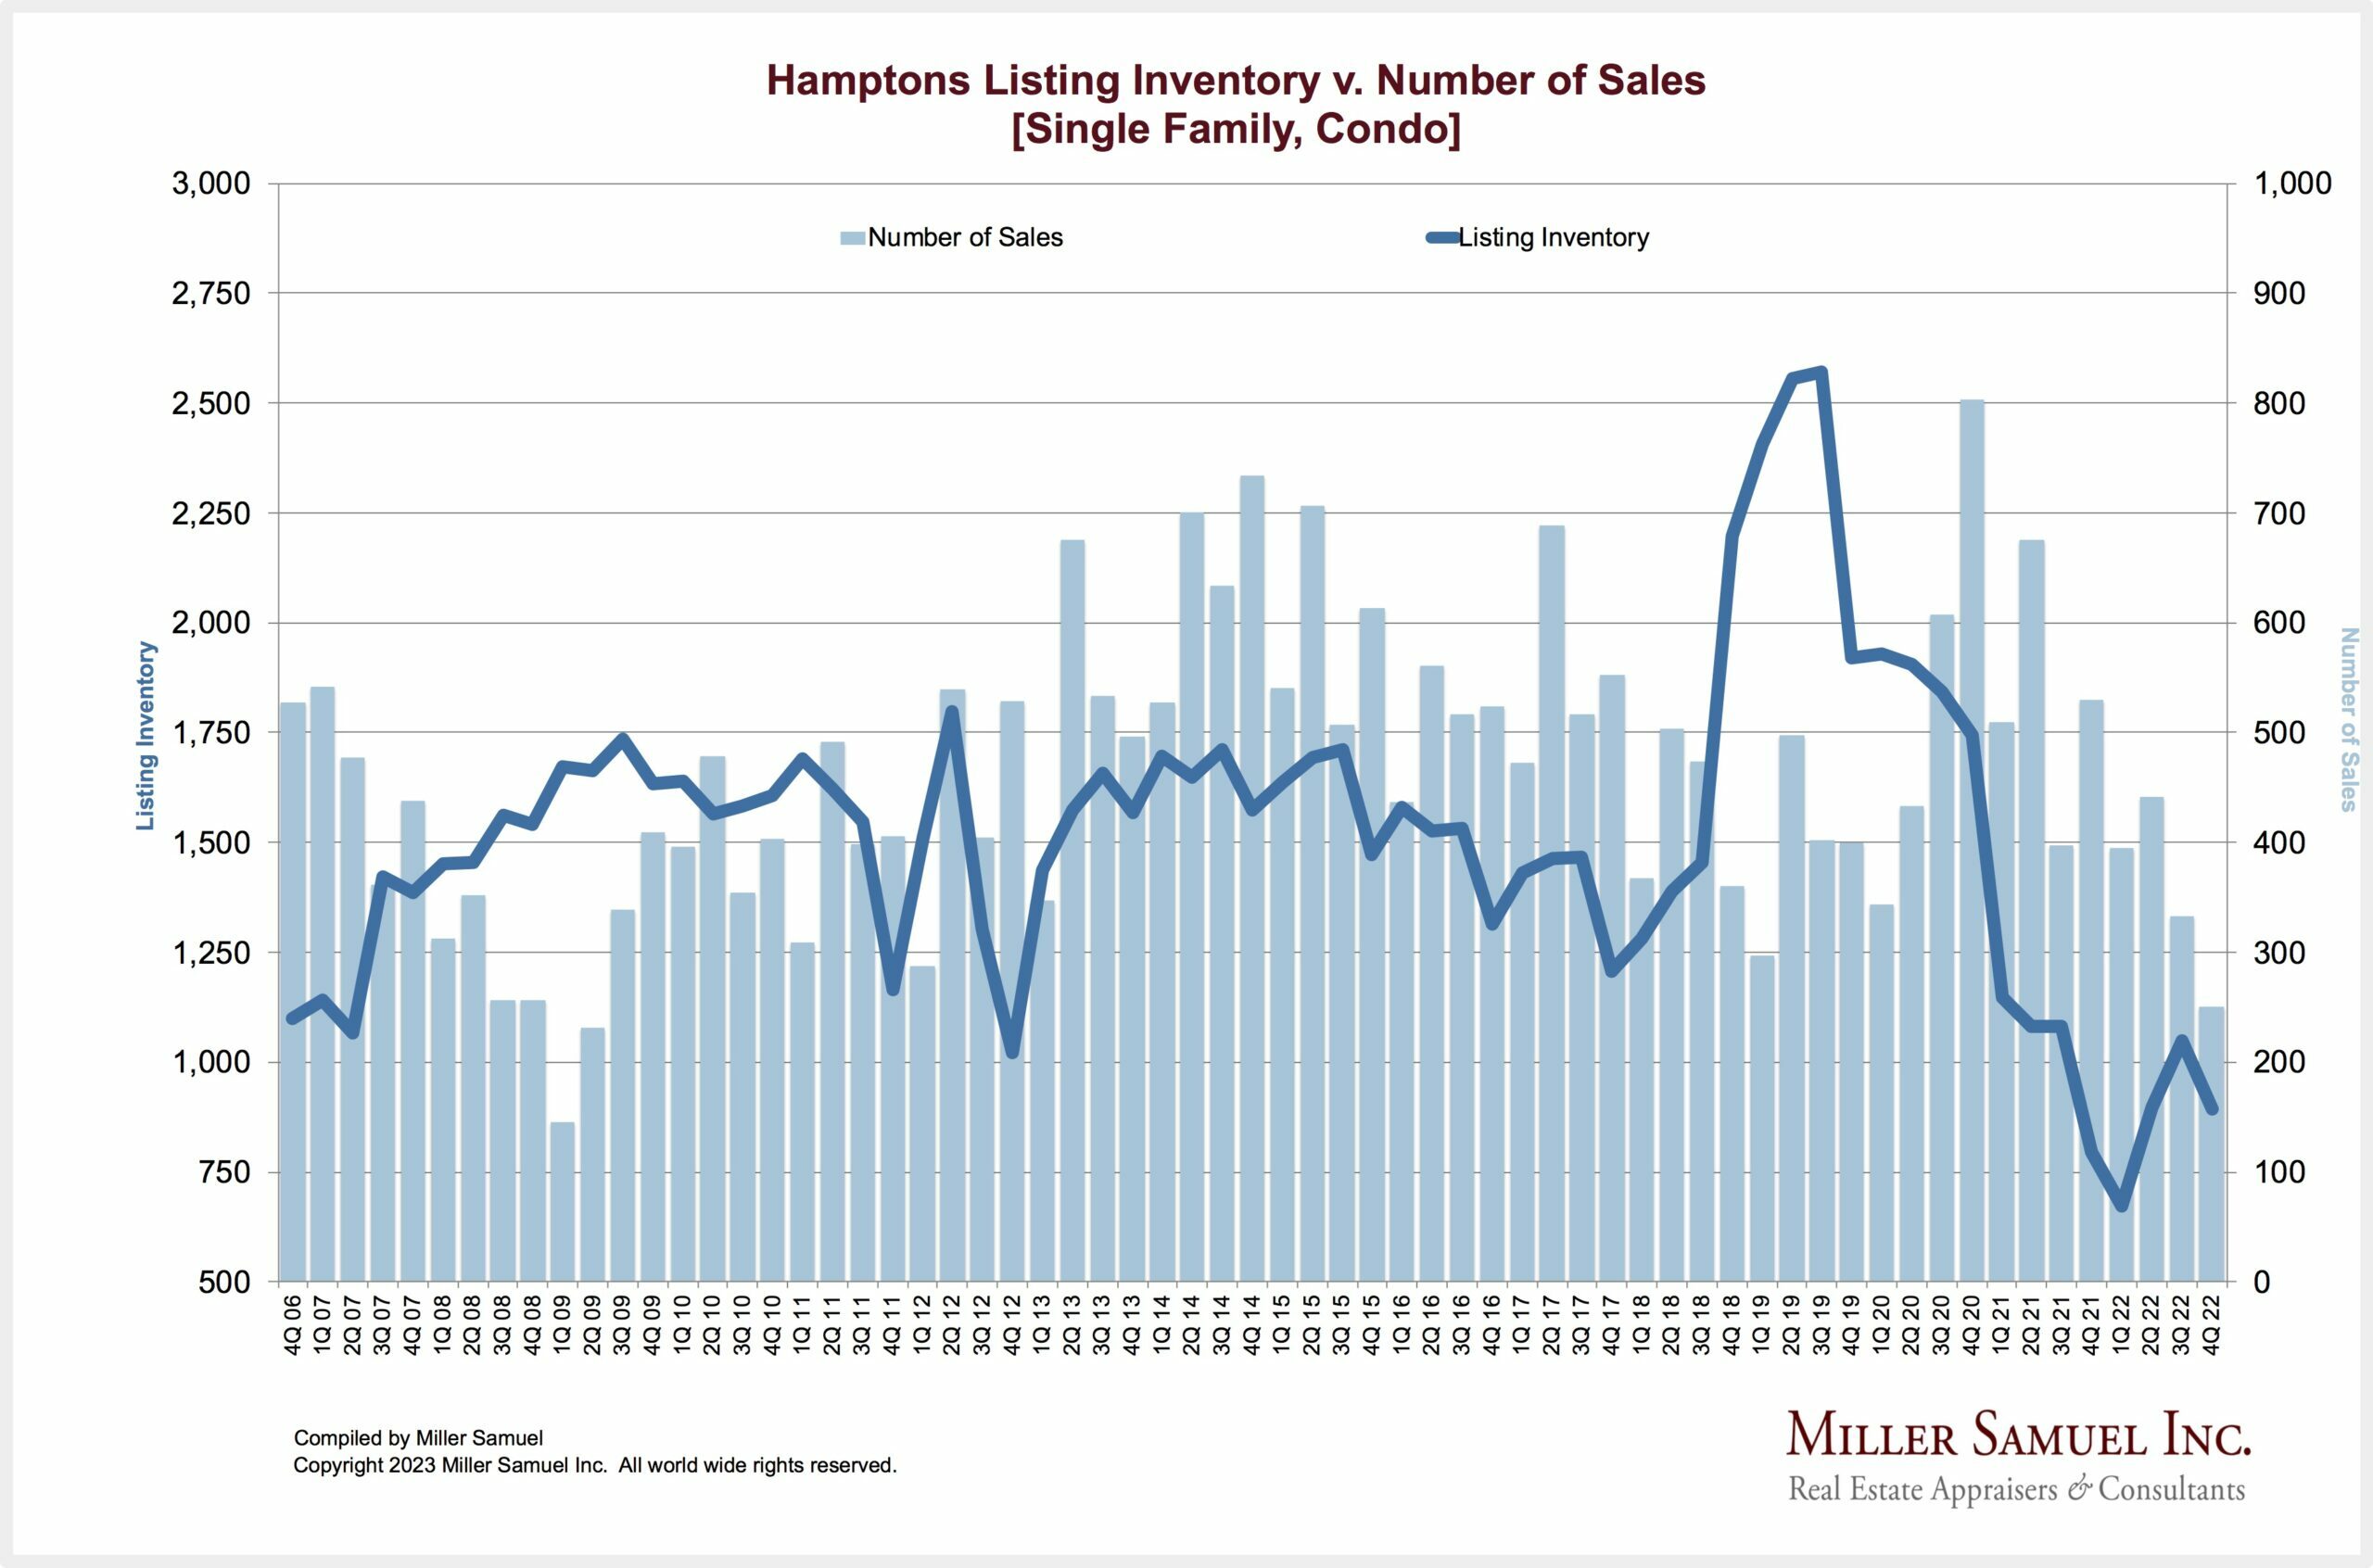 Hamptons Listing Inventory v. Number of Sales [Single Family, Condo]. COURTESY MILLER SAMUEL INC.